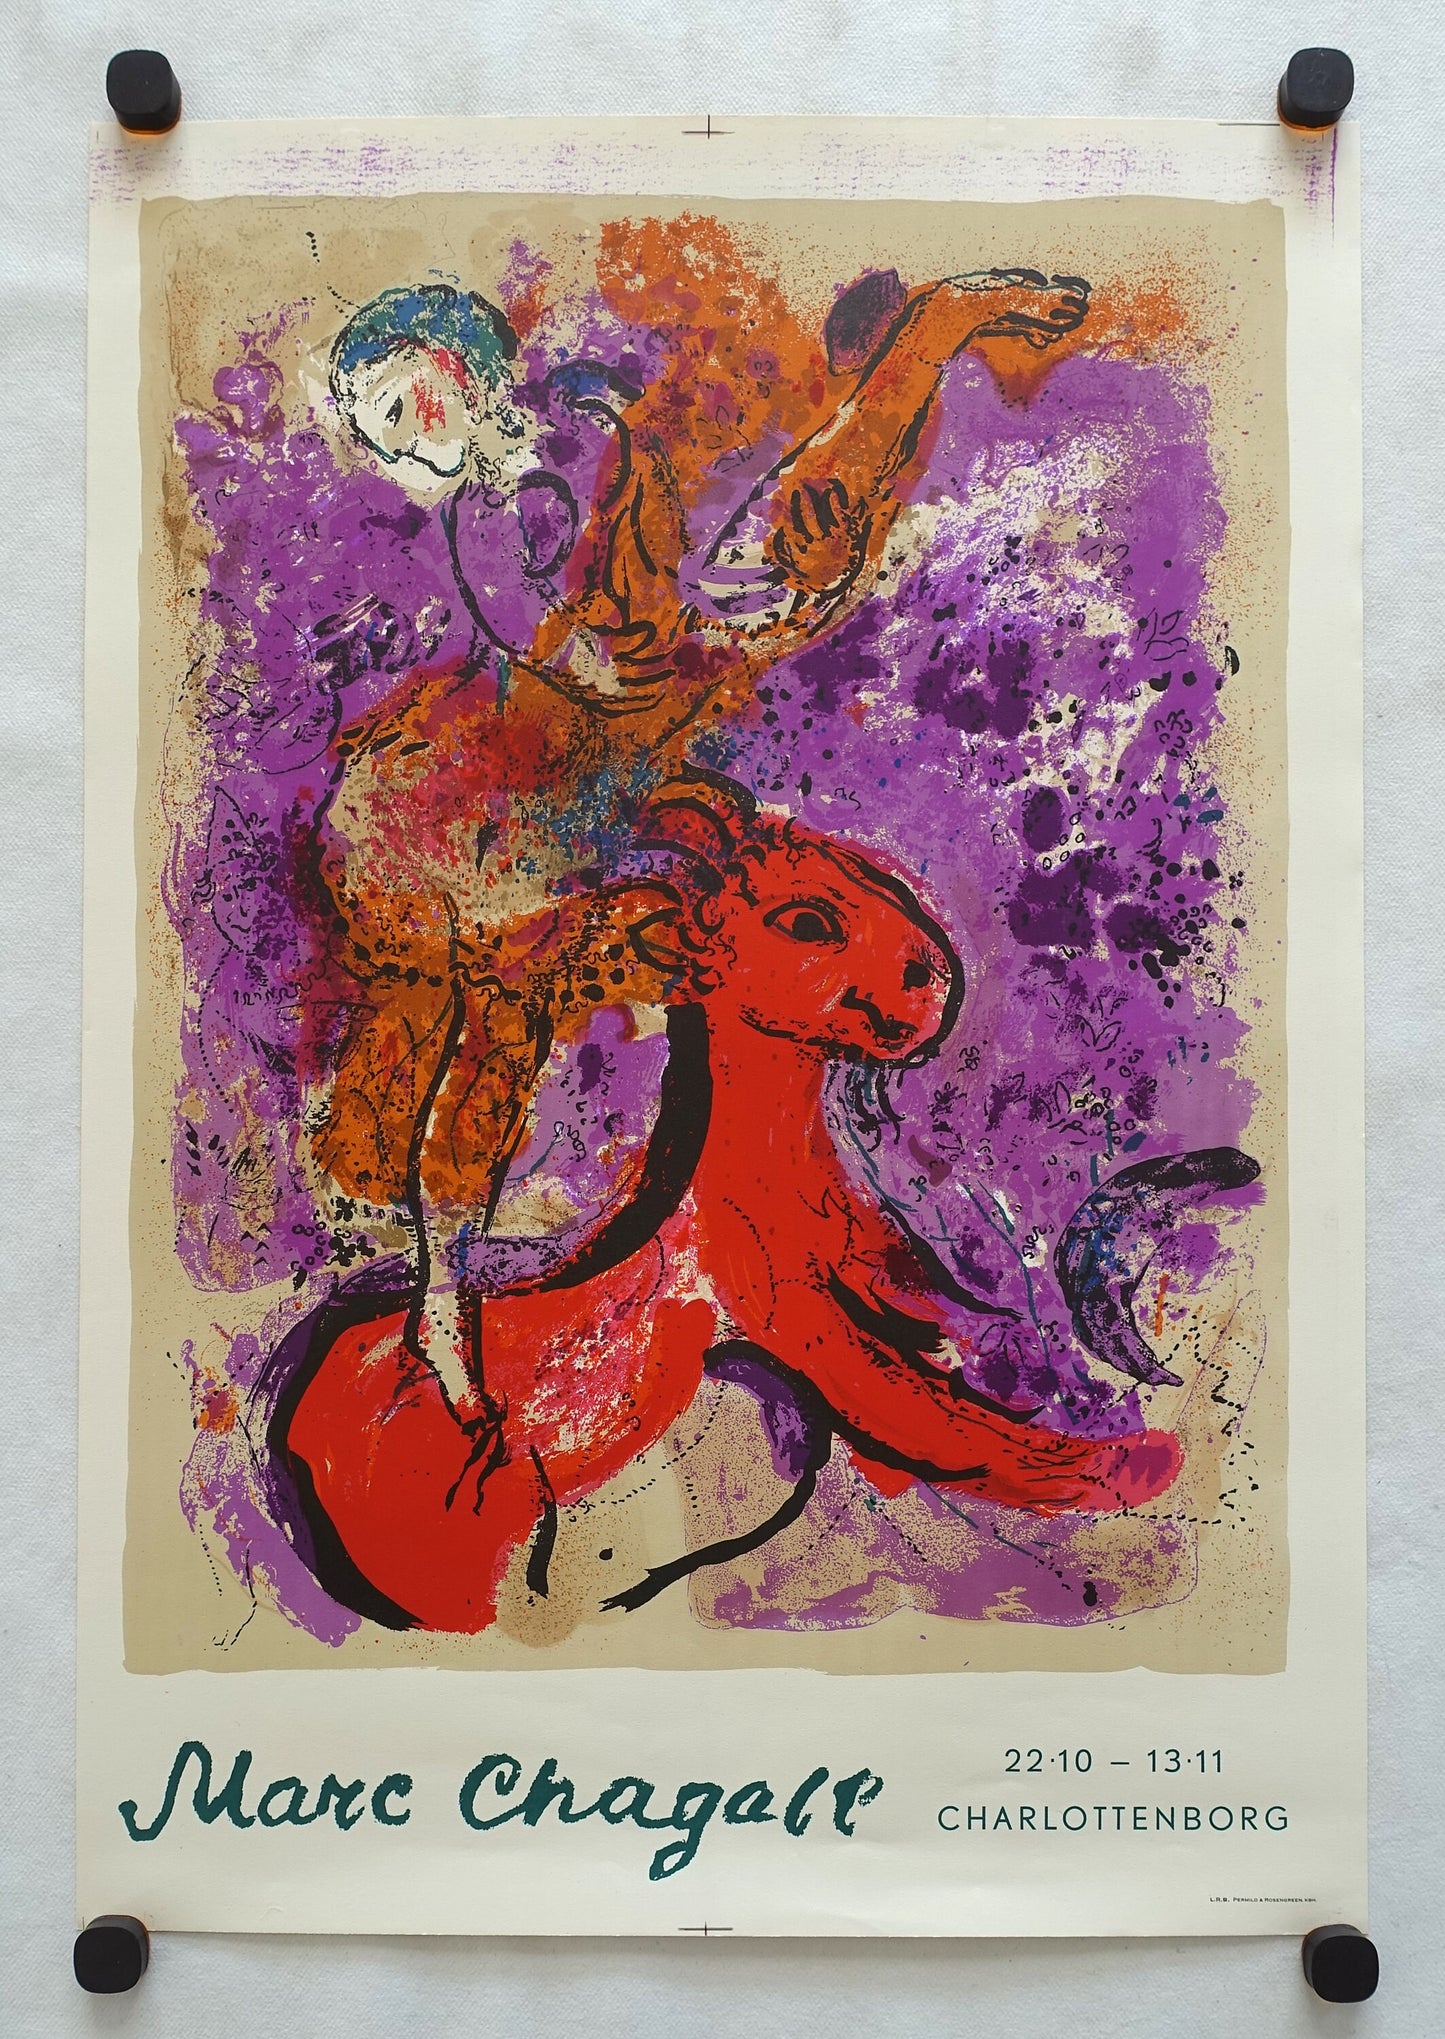 1960 Chagall Exhibition Poster Charlottenborg - Original Vintage Poster